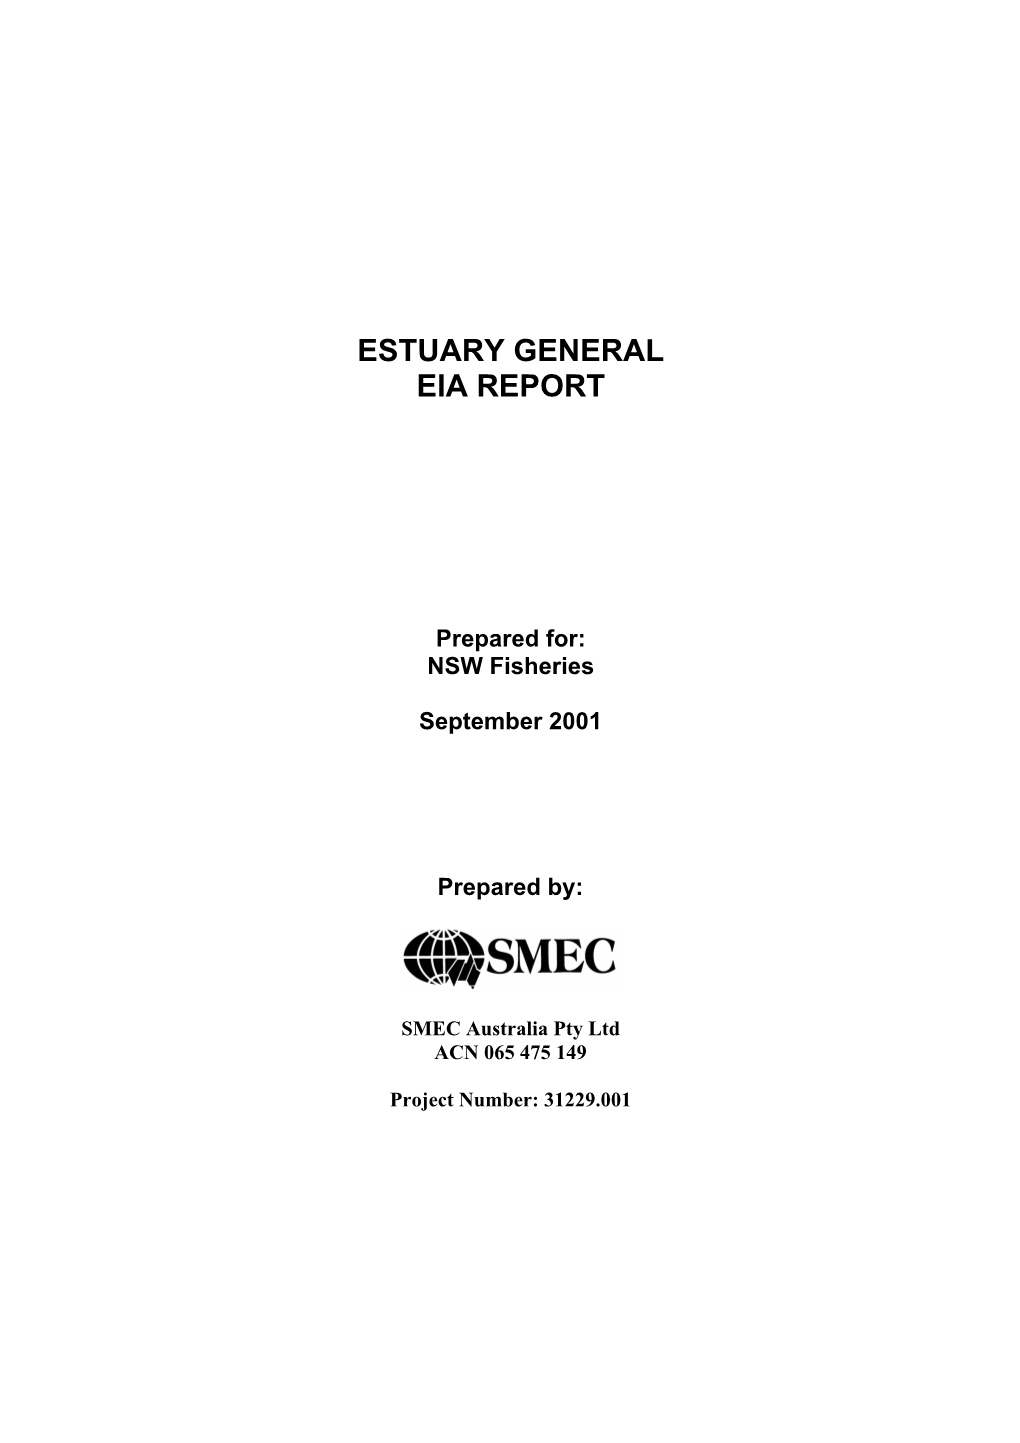 Estuary General Eia Report